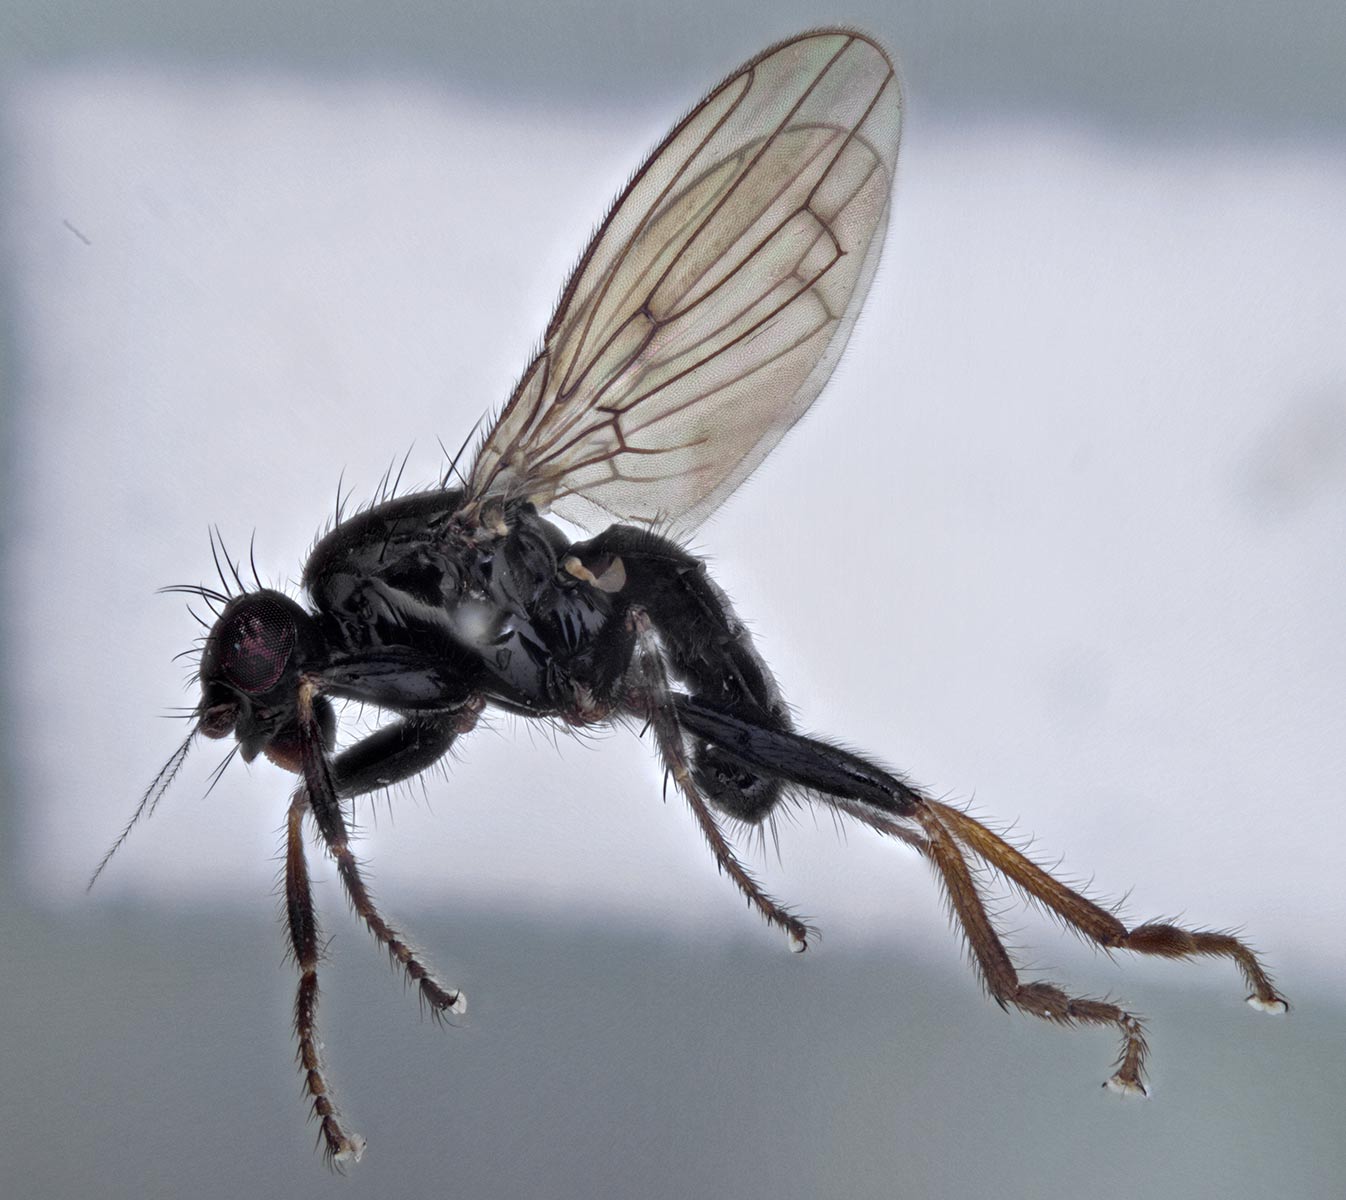 Sphaeroceridae: Crumomyia roserii (male) (1)